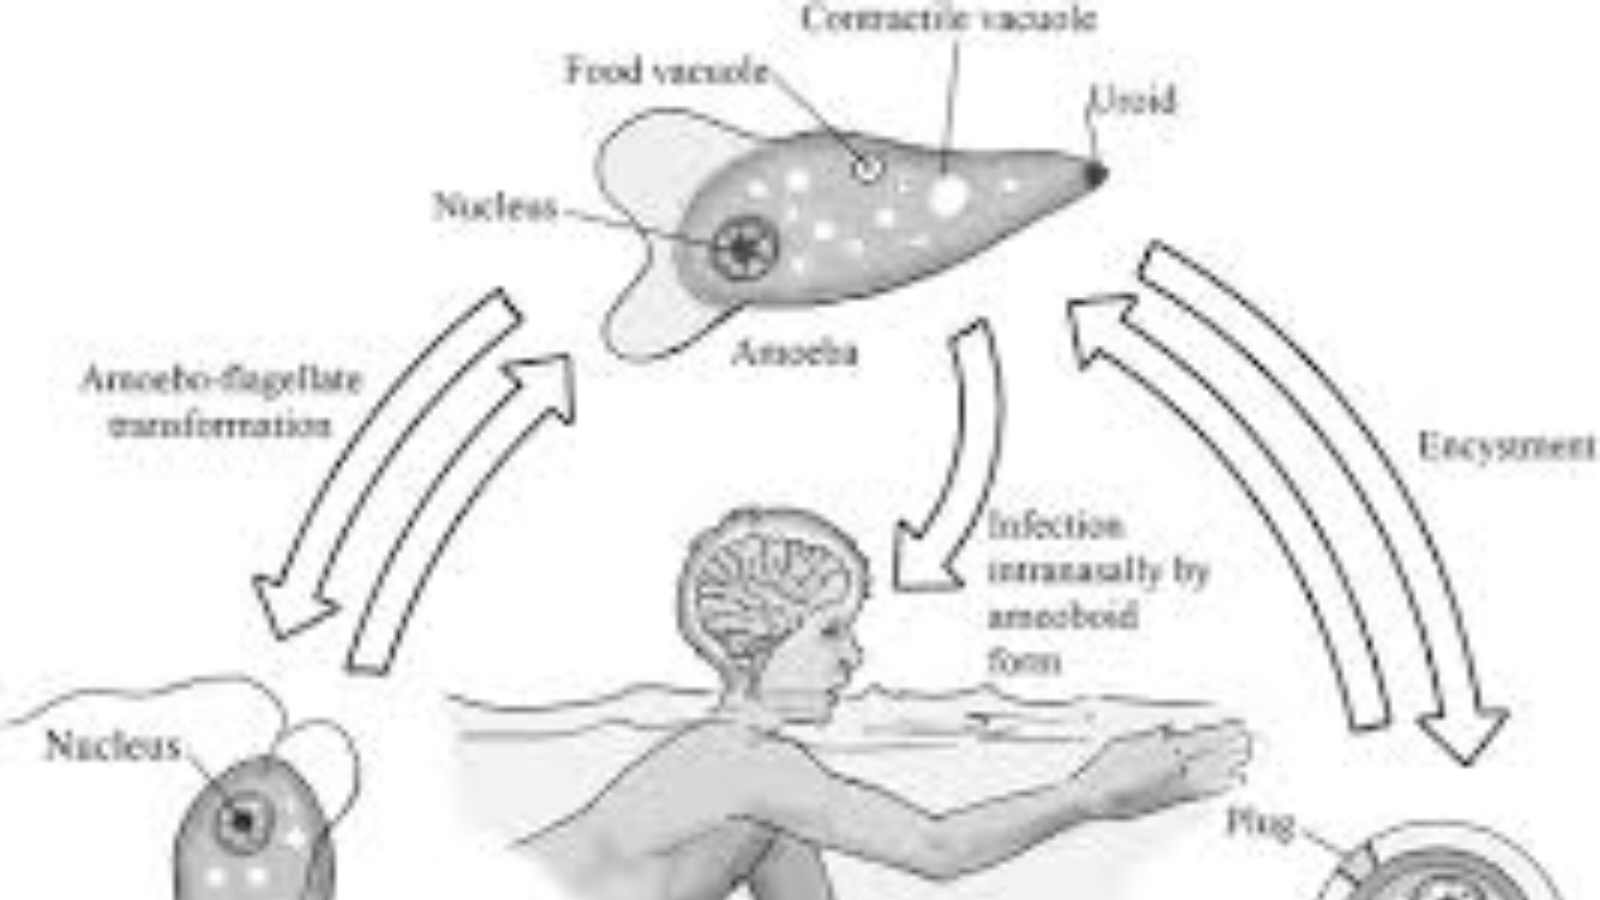 Brain eating amoeba